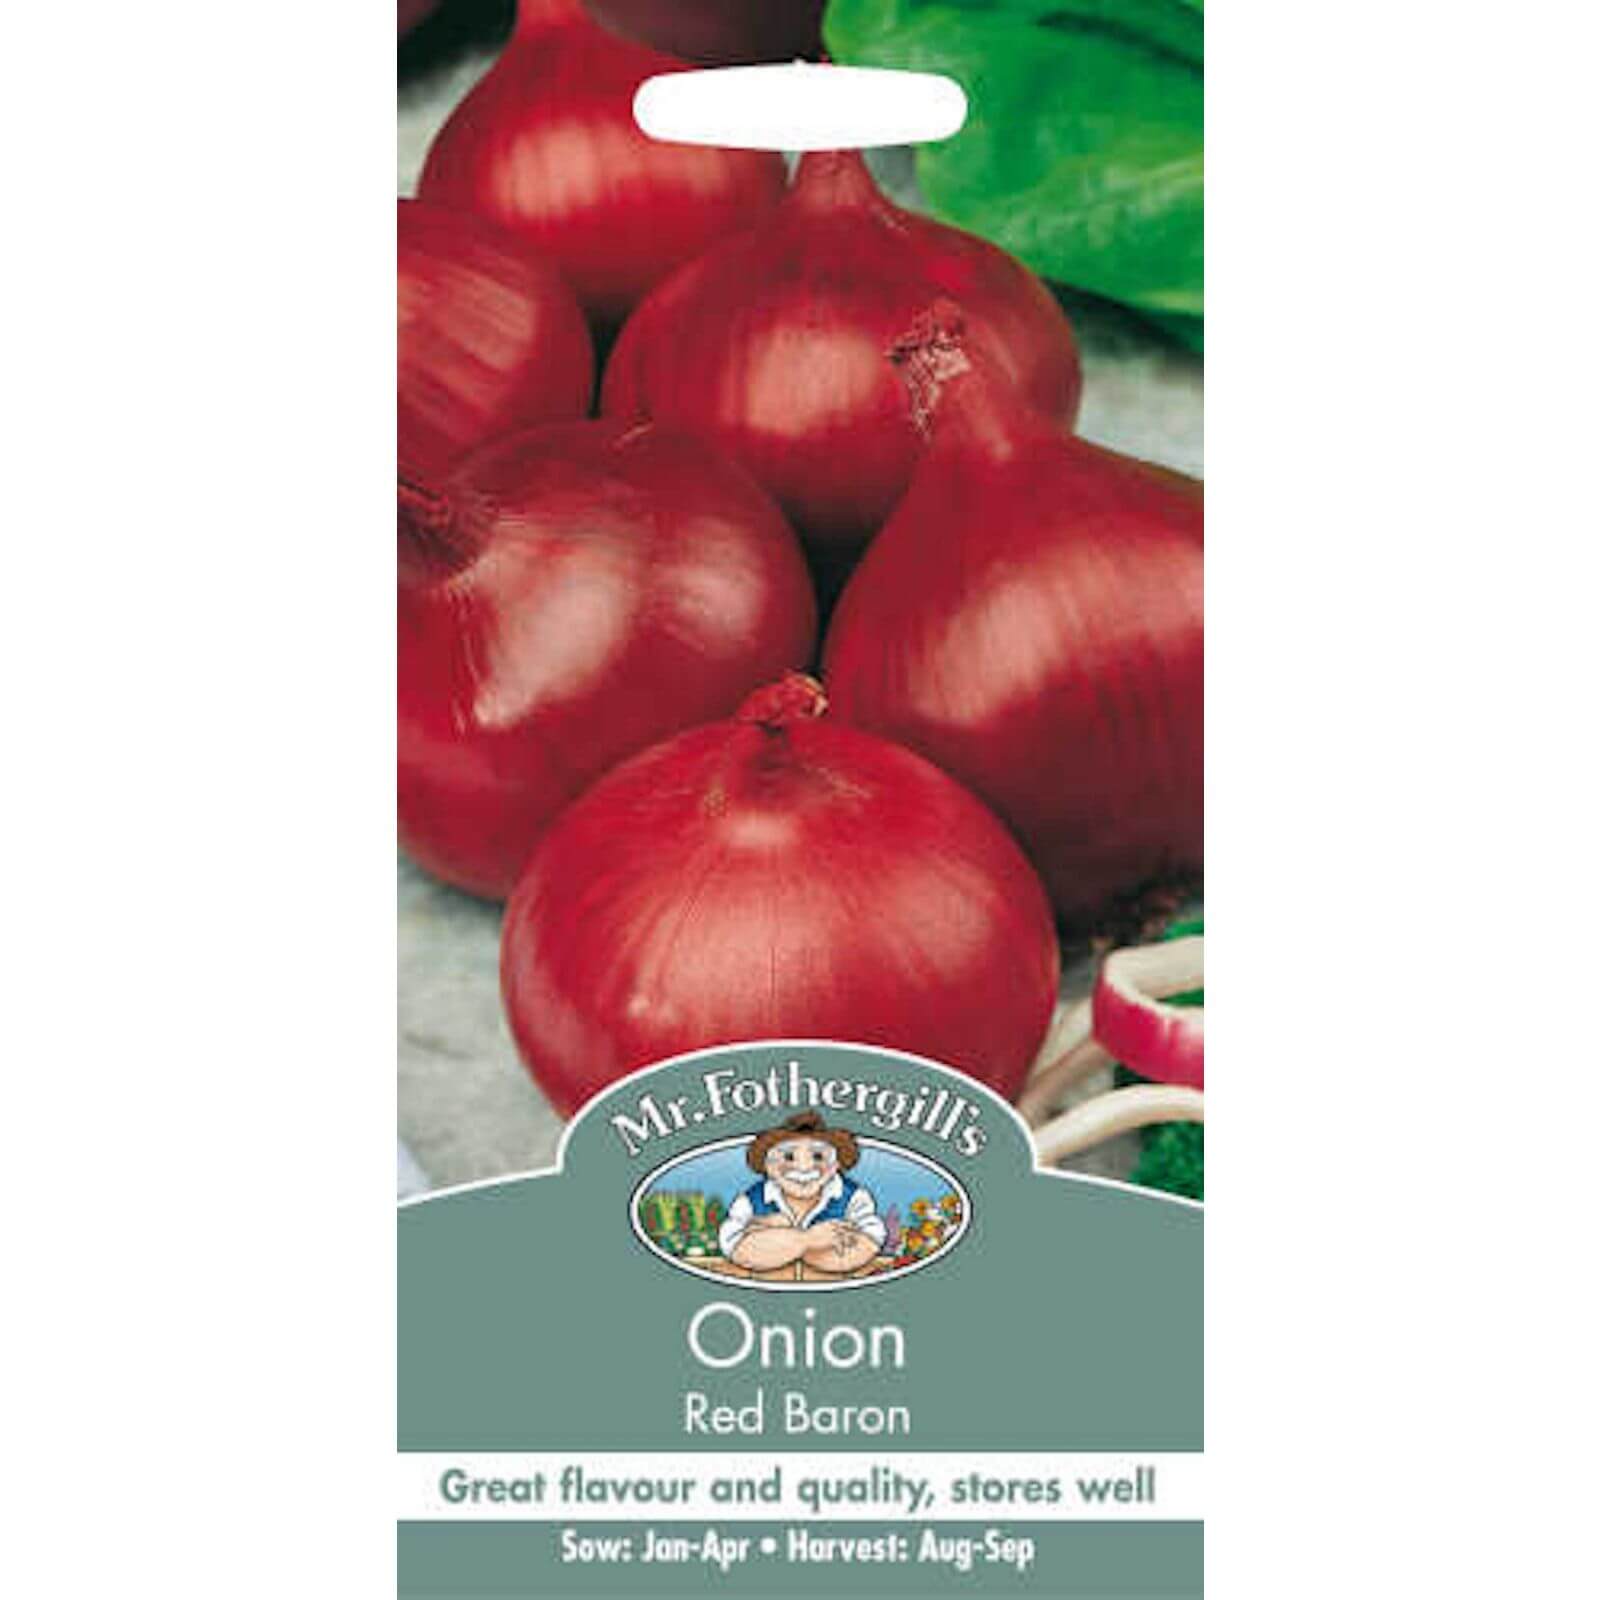 Mr. Fothergill's Onion Red Baron (Allium Cepa) Bulbs